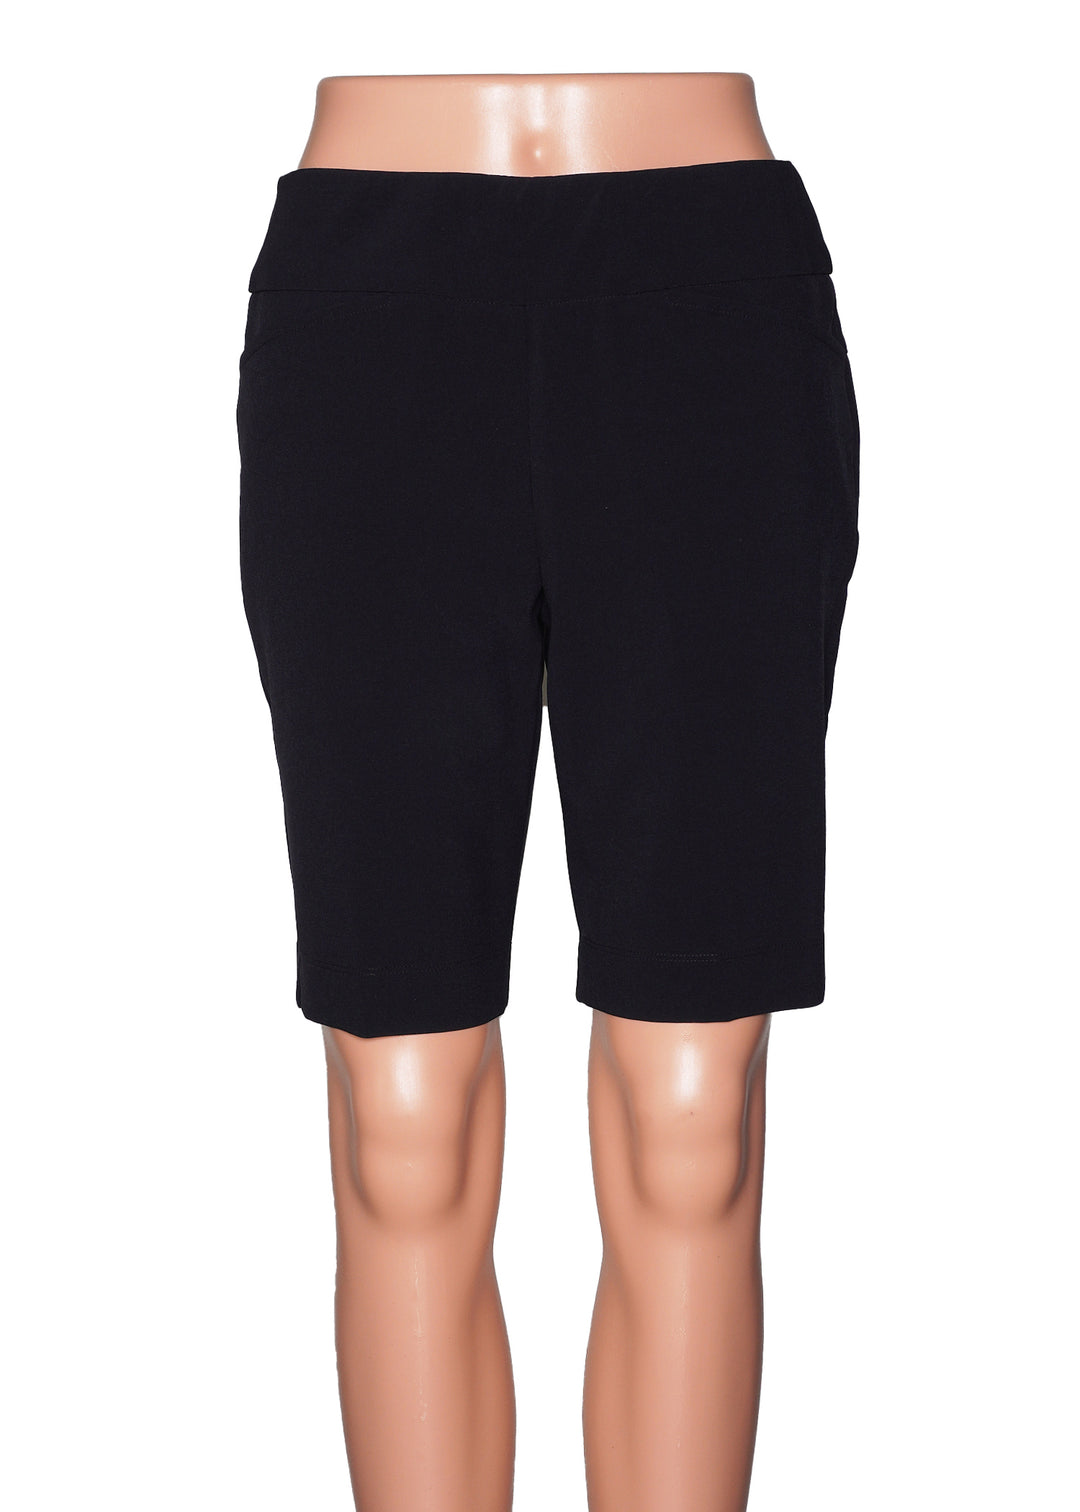 IBKUL Solid Women's Shorts - Size 4 - Skorzie